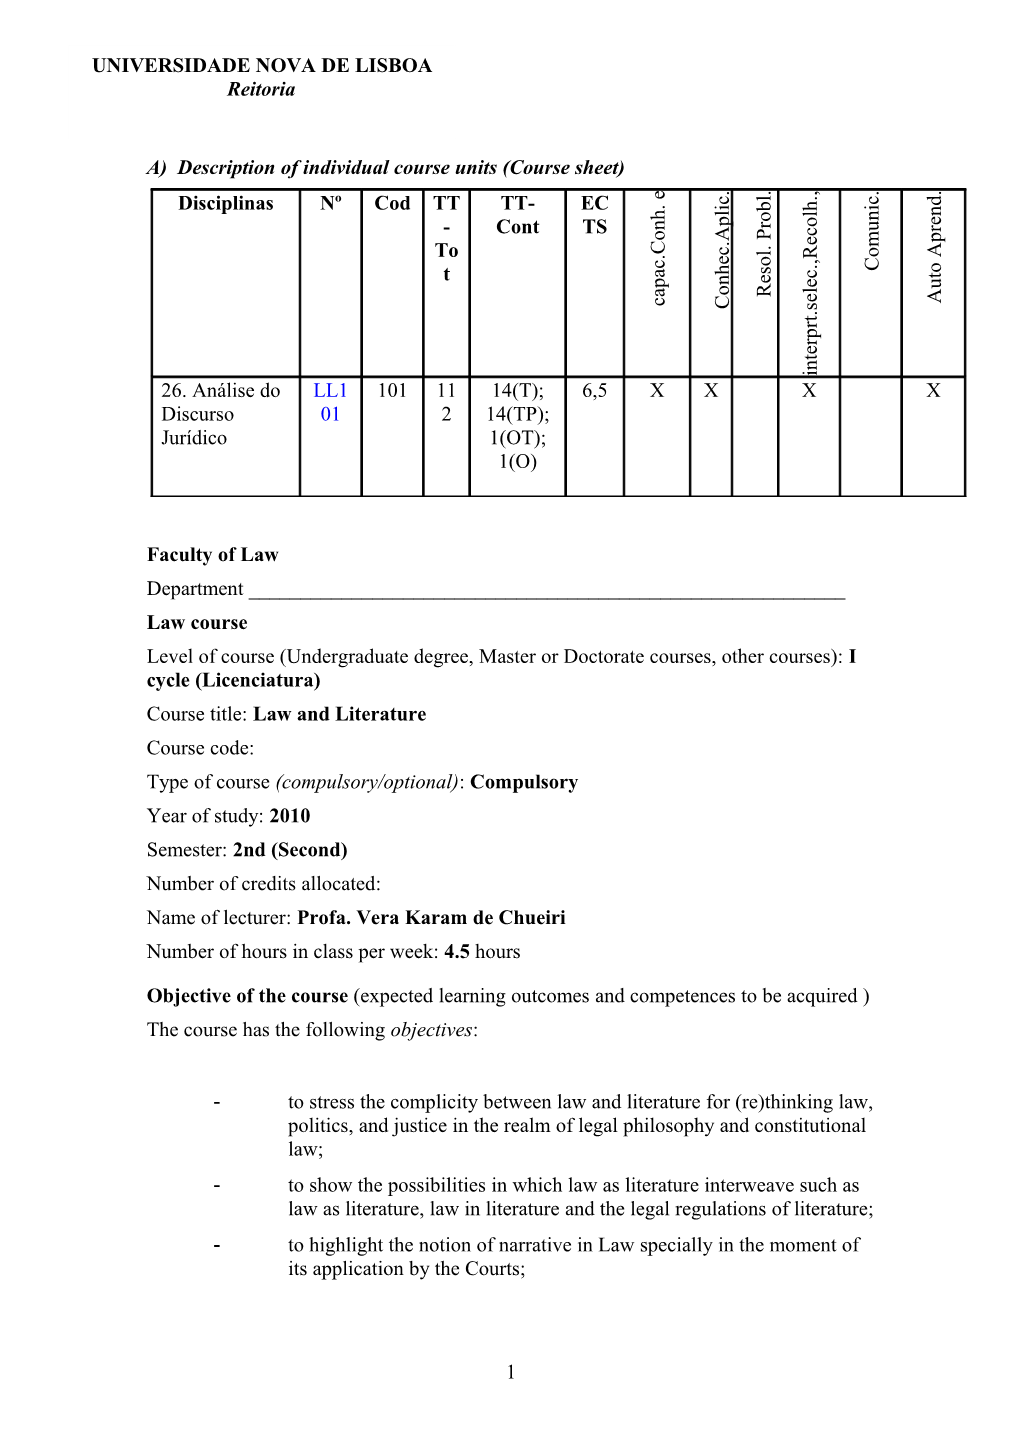 A)Description of Individual Course Units (Course Sheet)